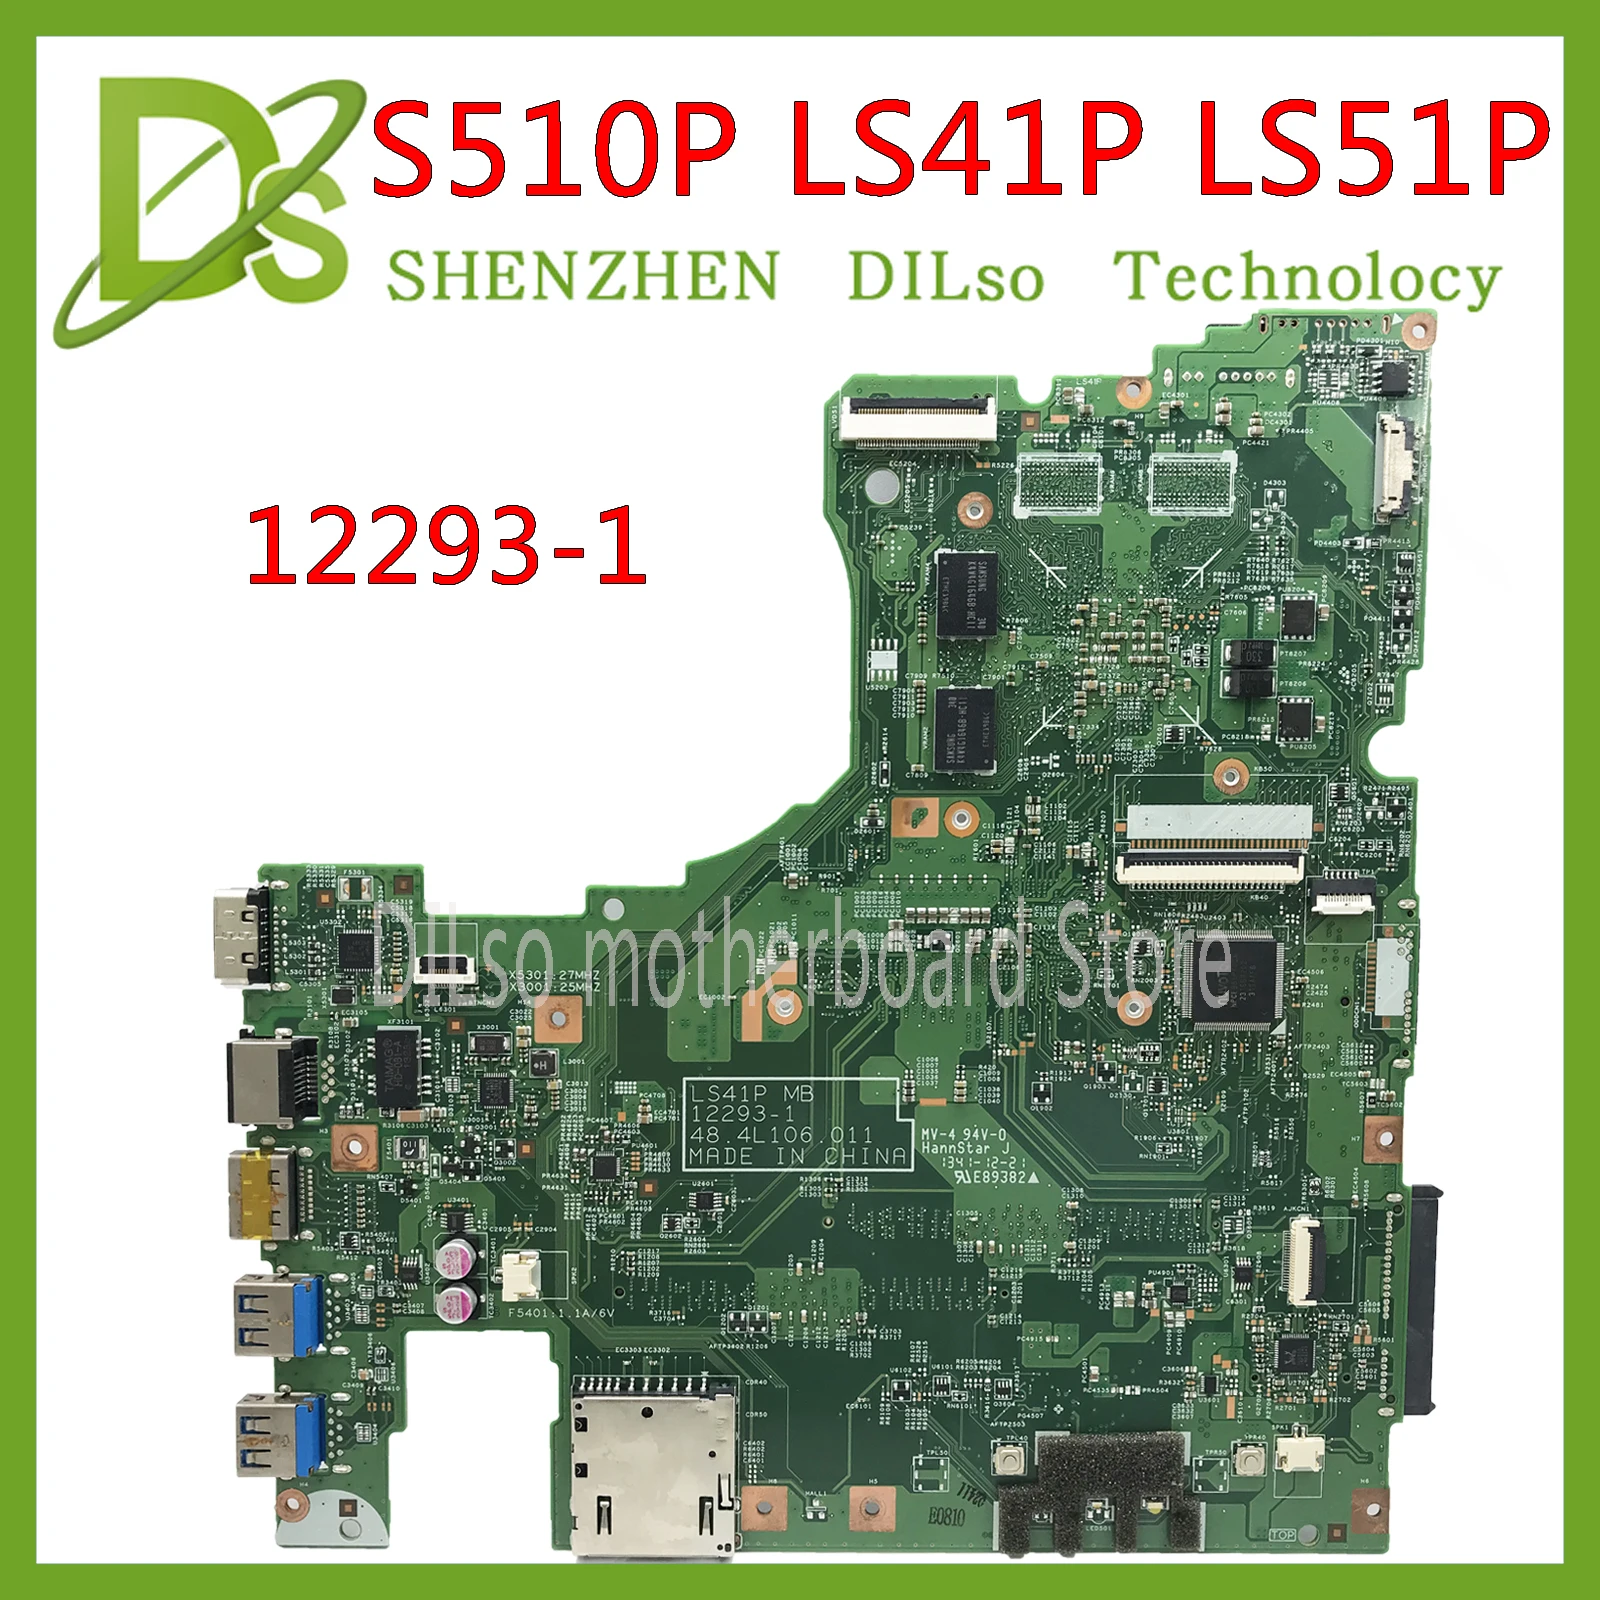 70% OFF  KEFU 12293-1 48.4L106.011 motherboard for Lenovo S510P LS41P LS51P motherboard I5-4200U CPU GT720M-